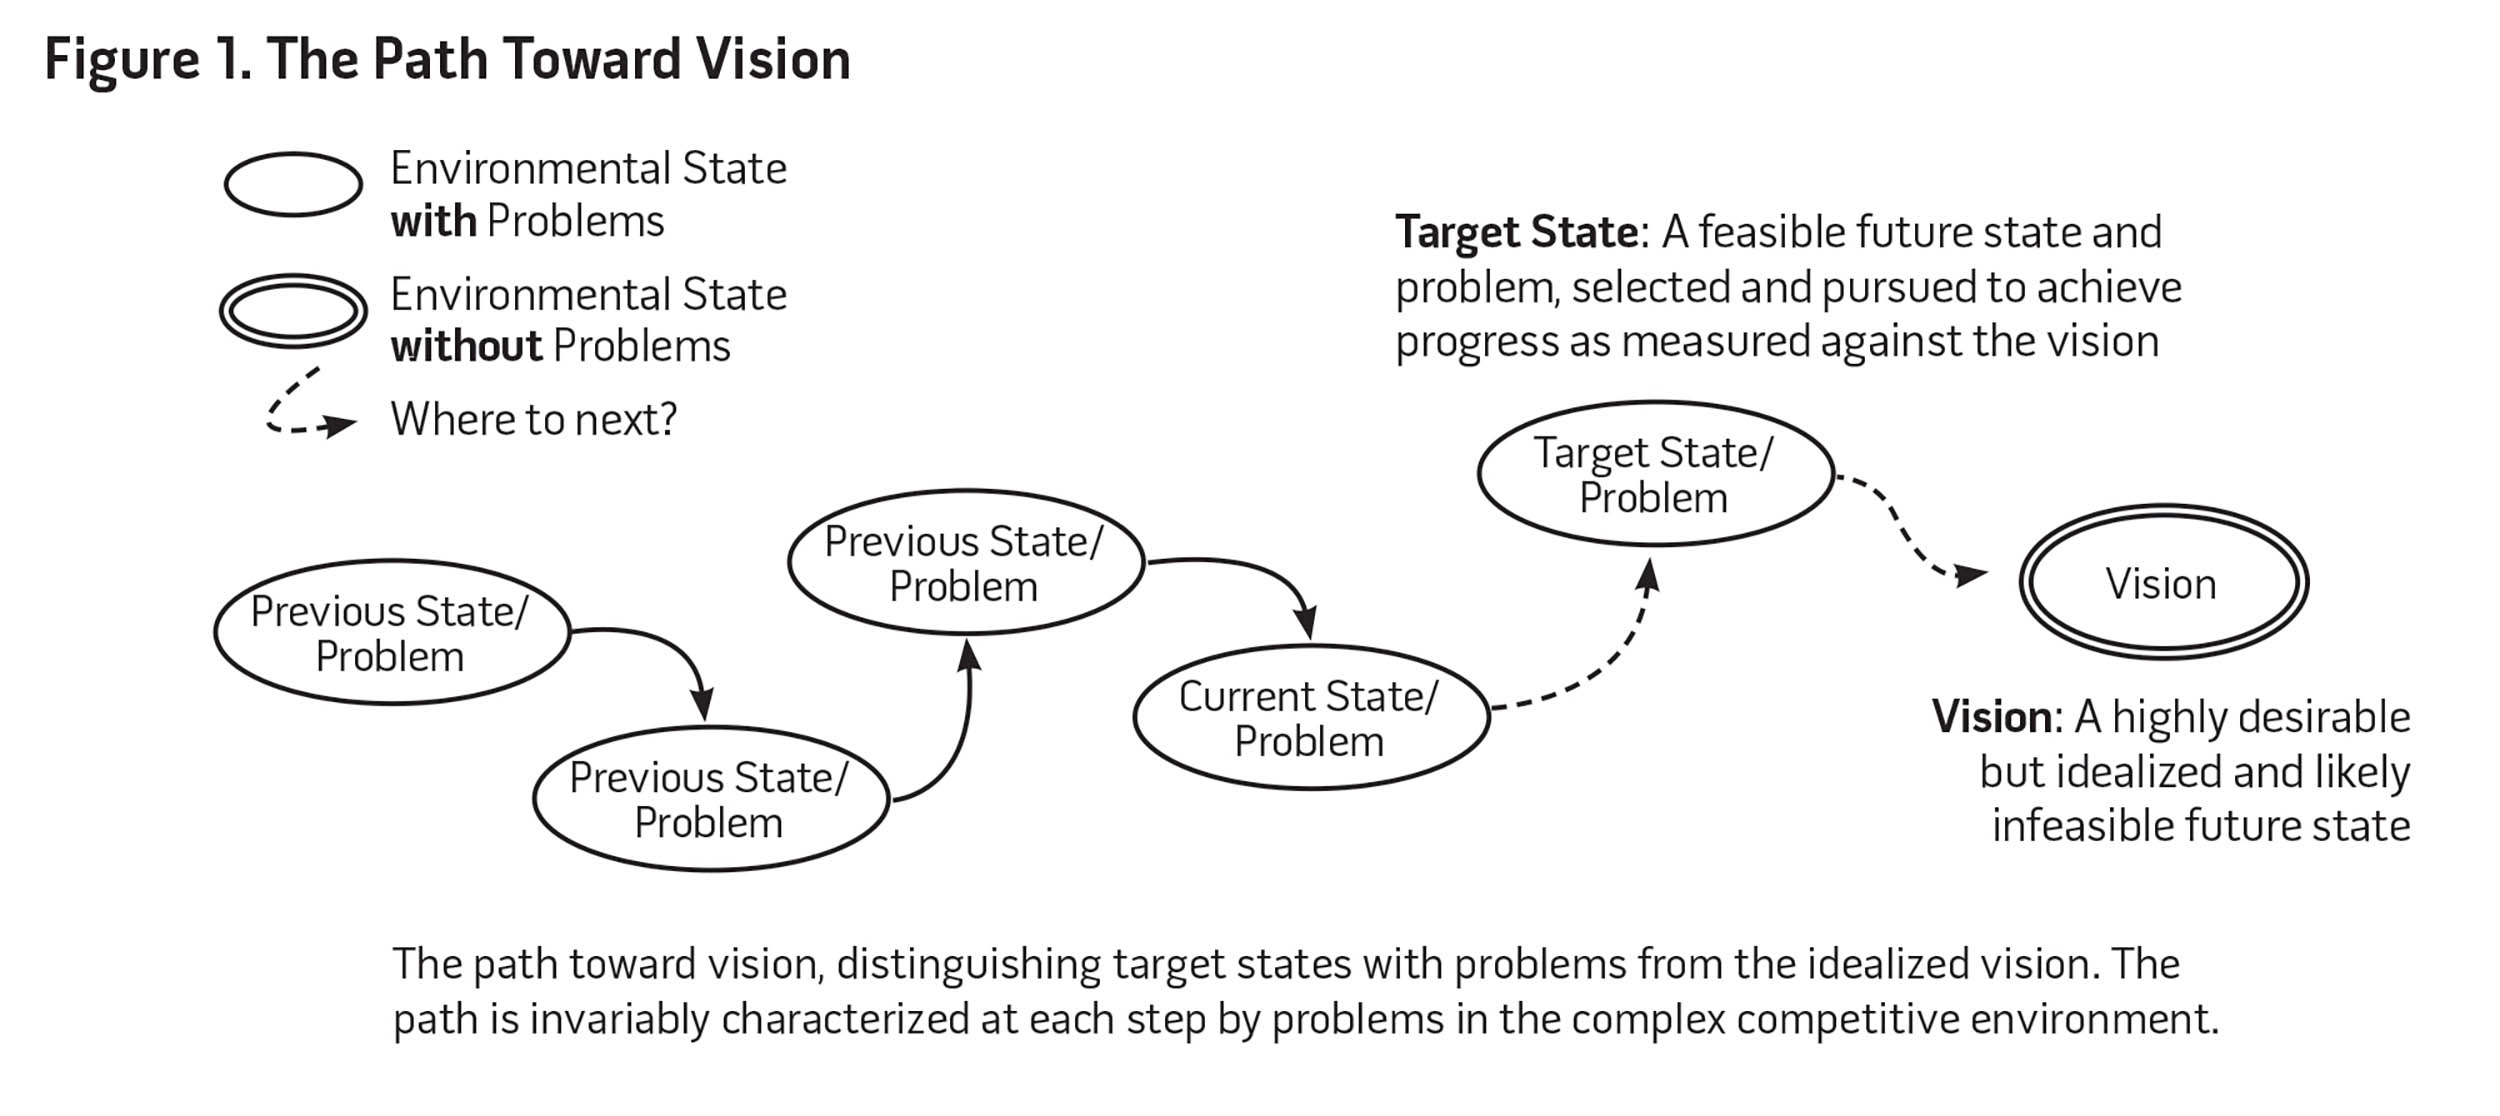 Figure 1. The Path Toward Vision